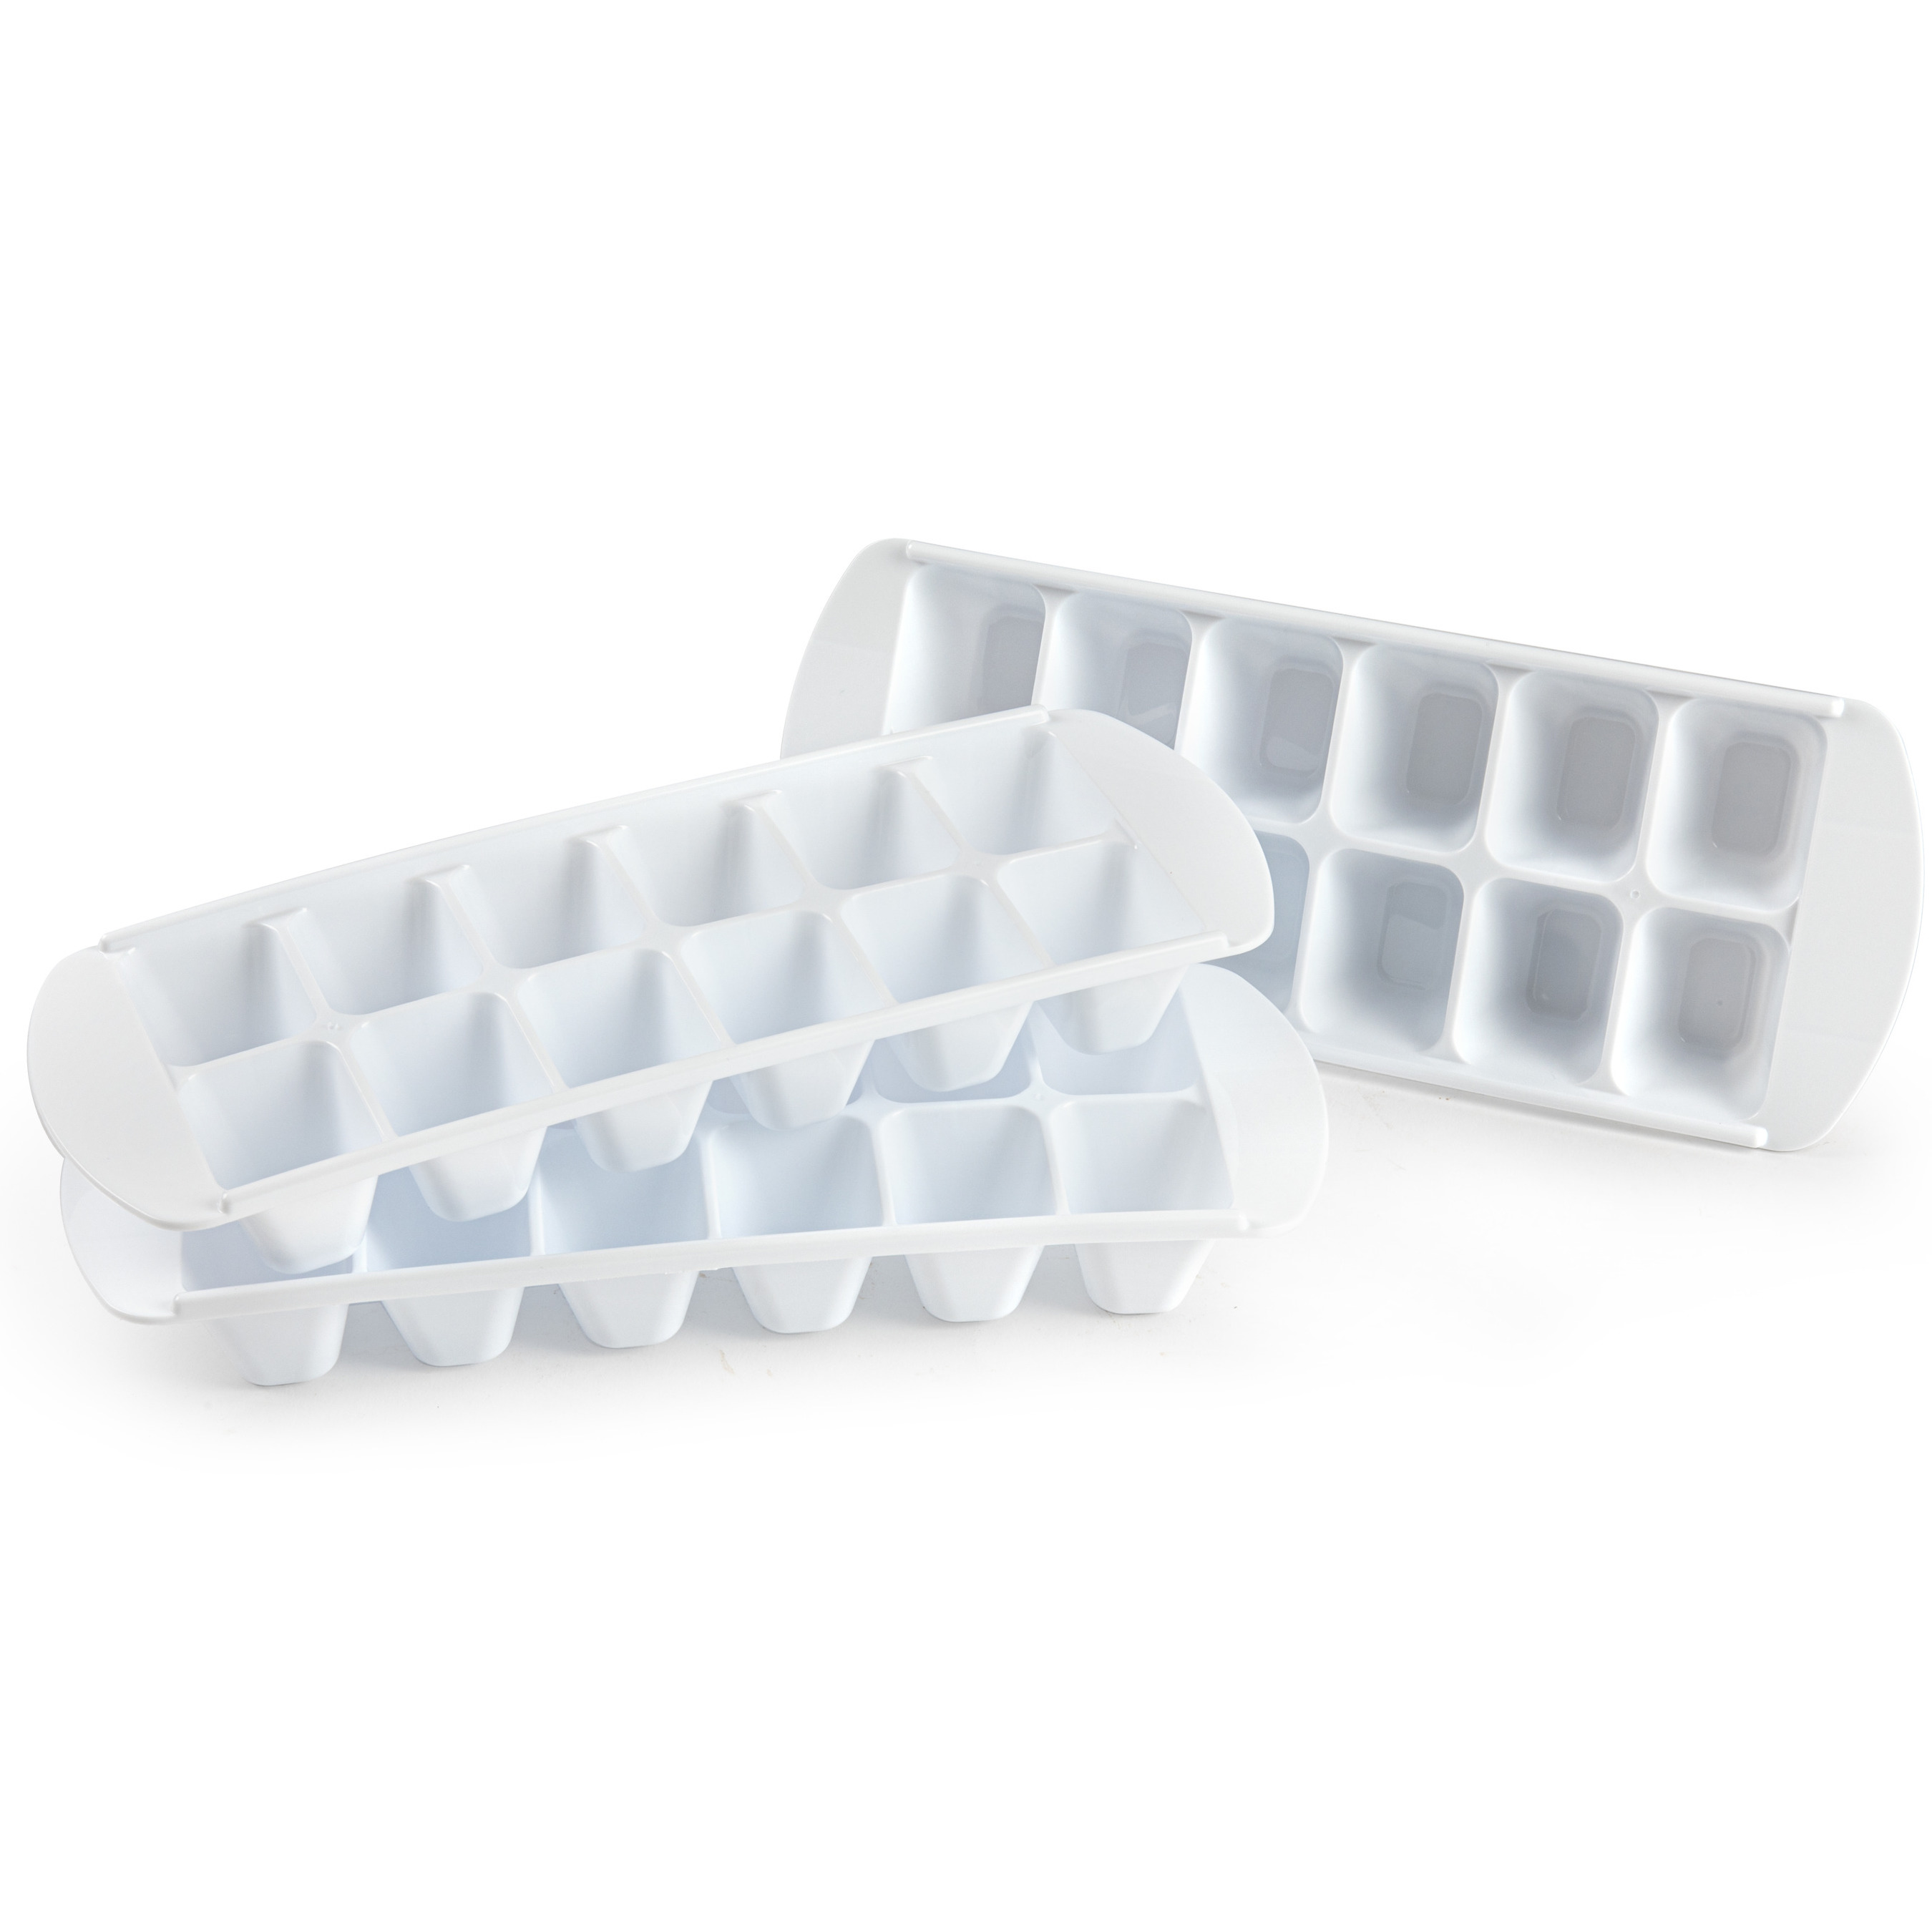 3x stuks IJsblokjes-ijsklontjes maken bakjes wit 29 x 11 cm